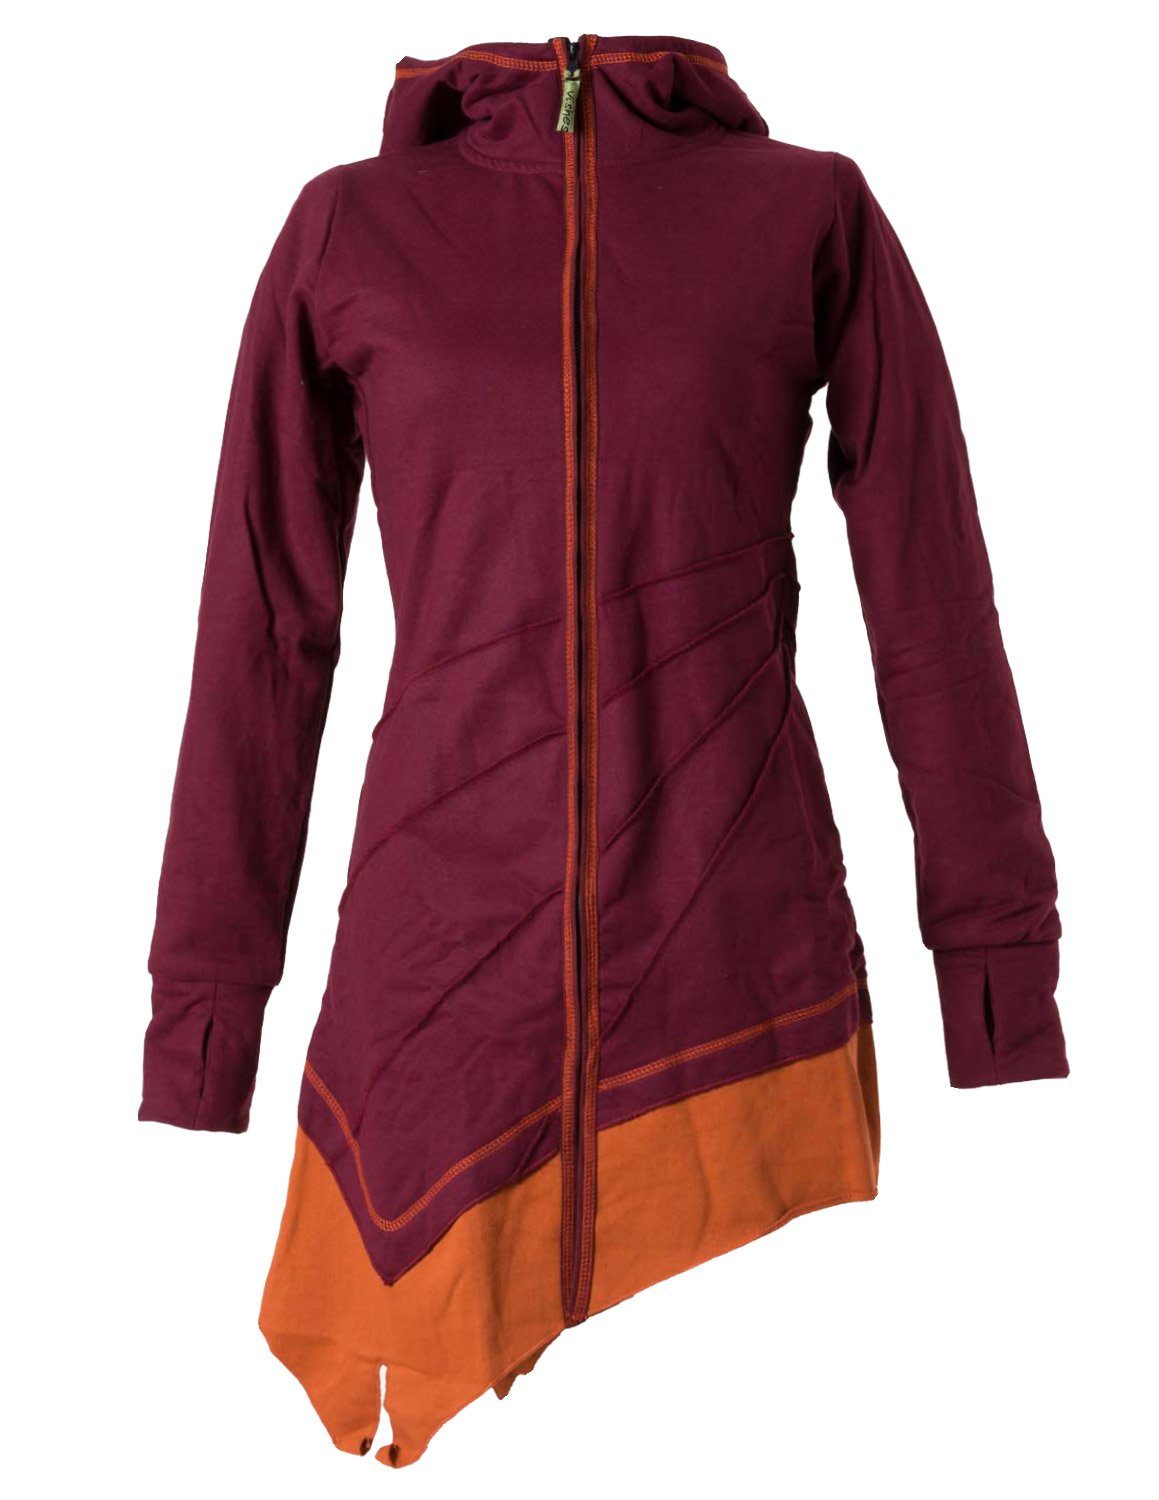 Vishes Kapuzensweatjacke Asymmetrischer Mantel Zipfelkapuze - Daumenlöcher Patchwork rot-orange | Zip Hoodies